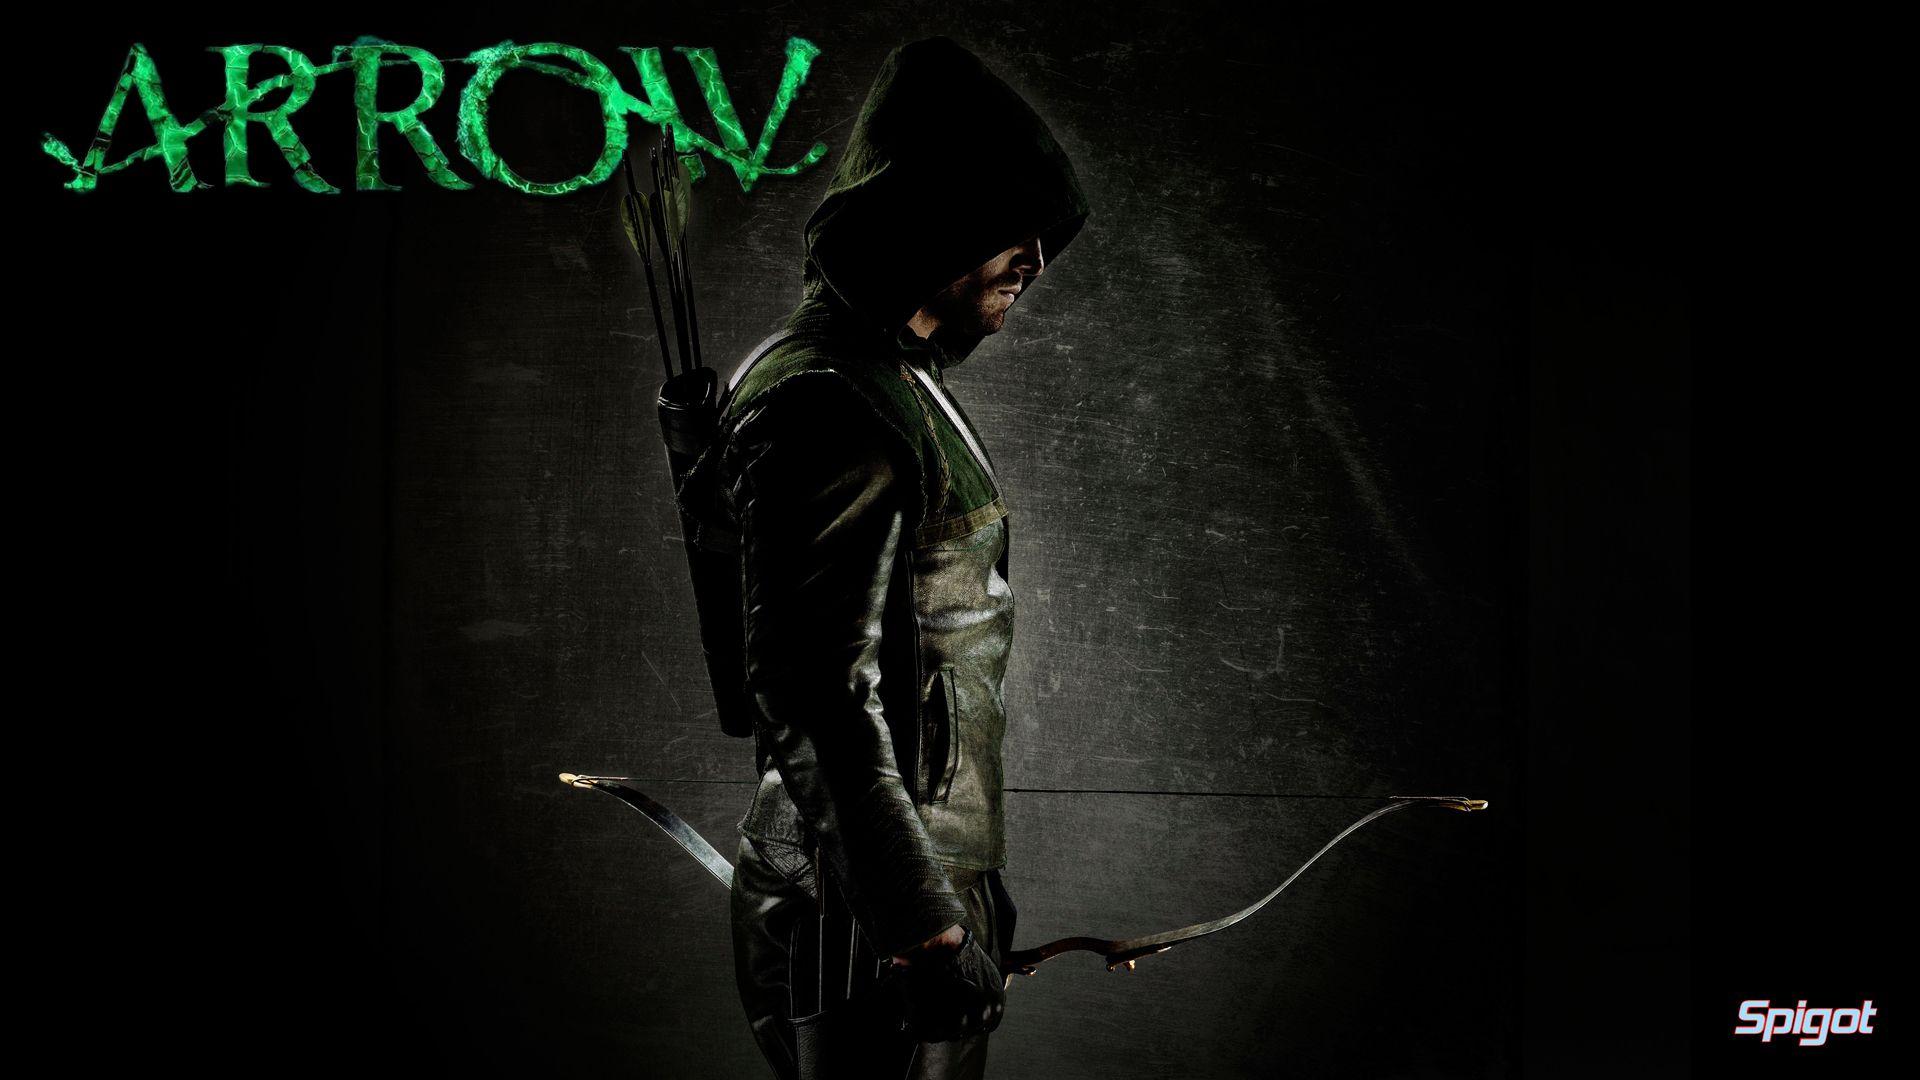 Arrow TV Show Logo - Arrow TV Series Logo HD Wallpaper, Background Image